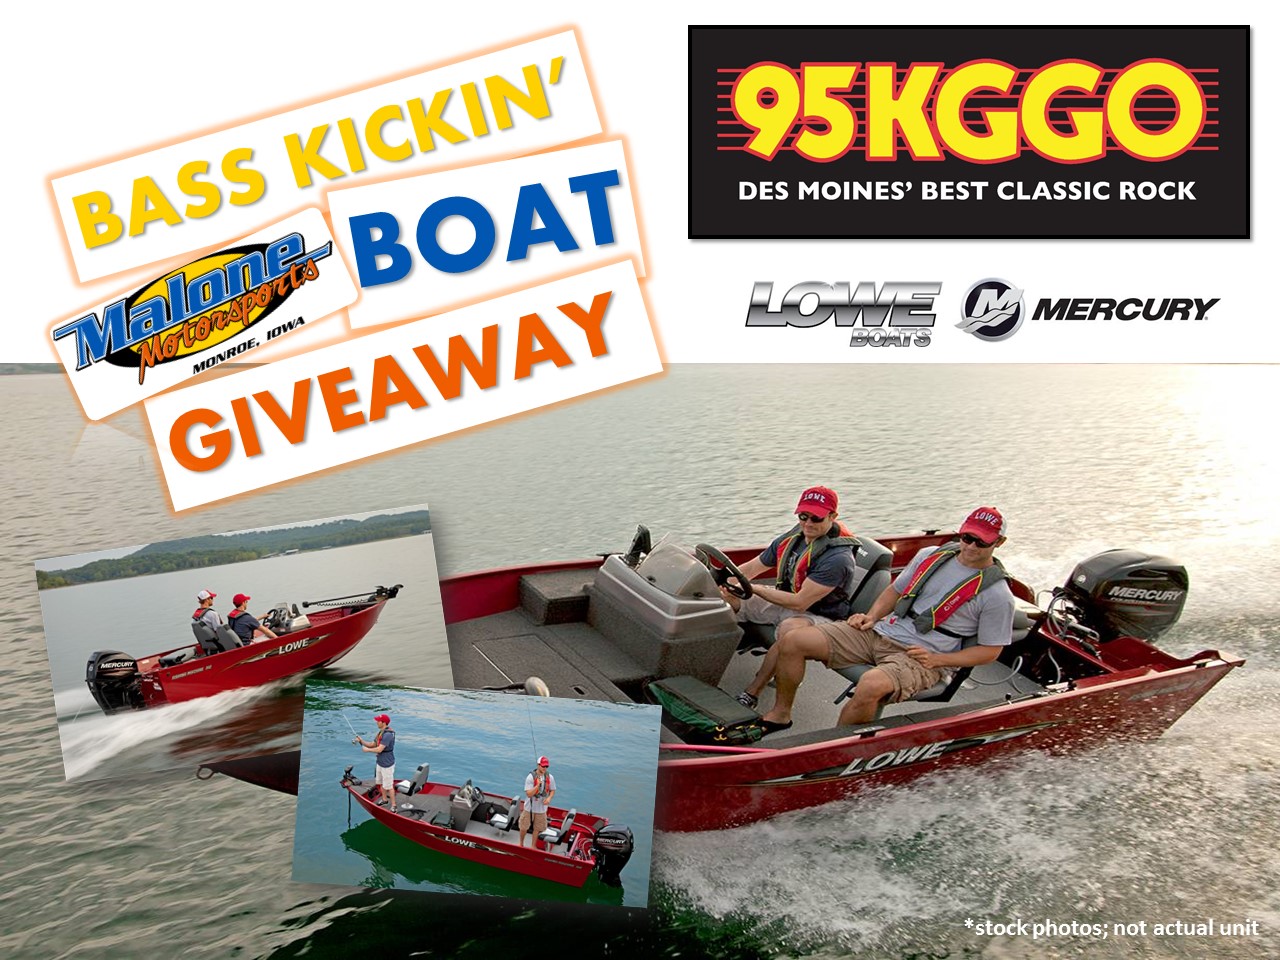 Bass Kickin’ Boat Giveaway 95 KGGO